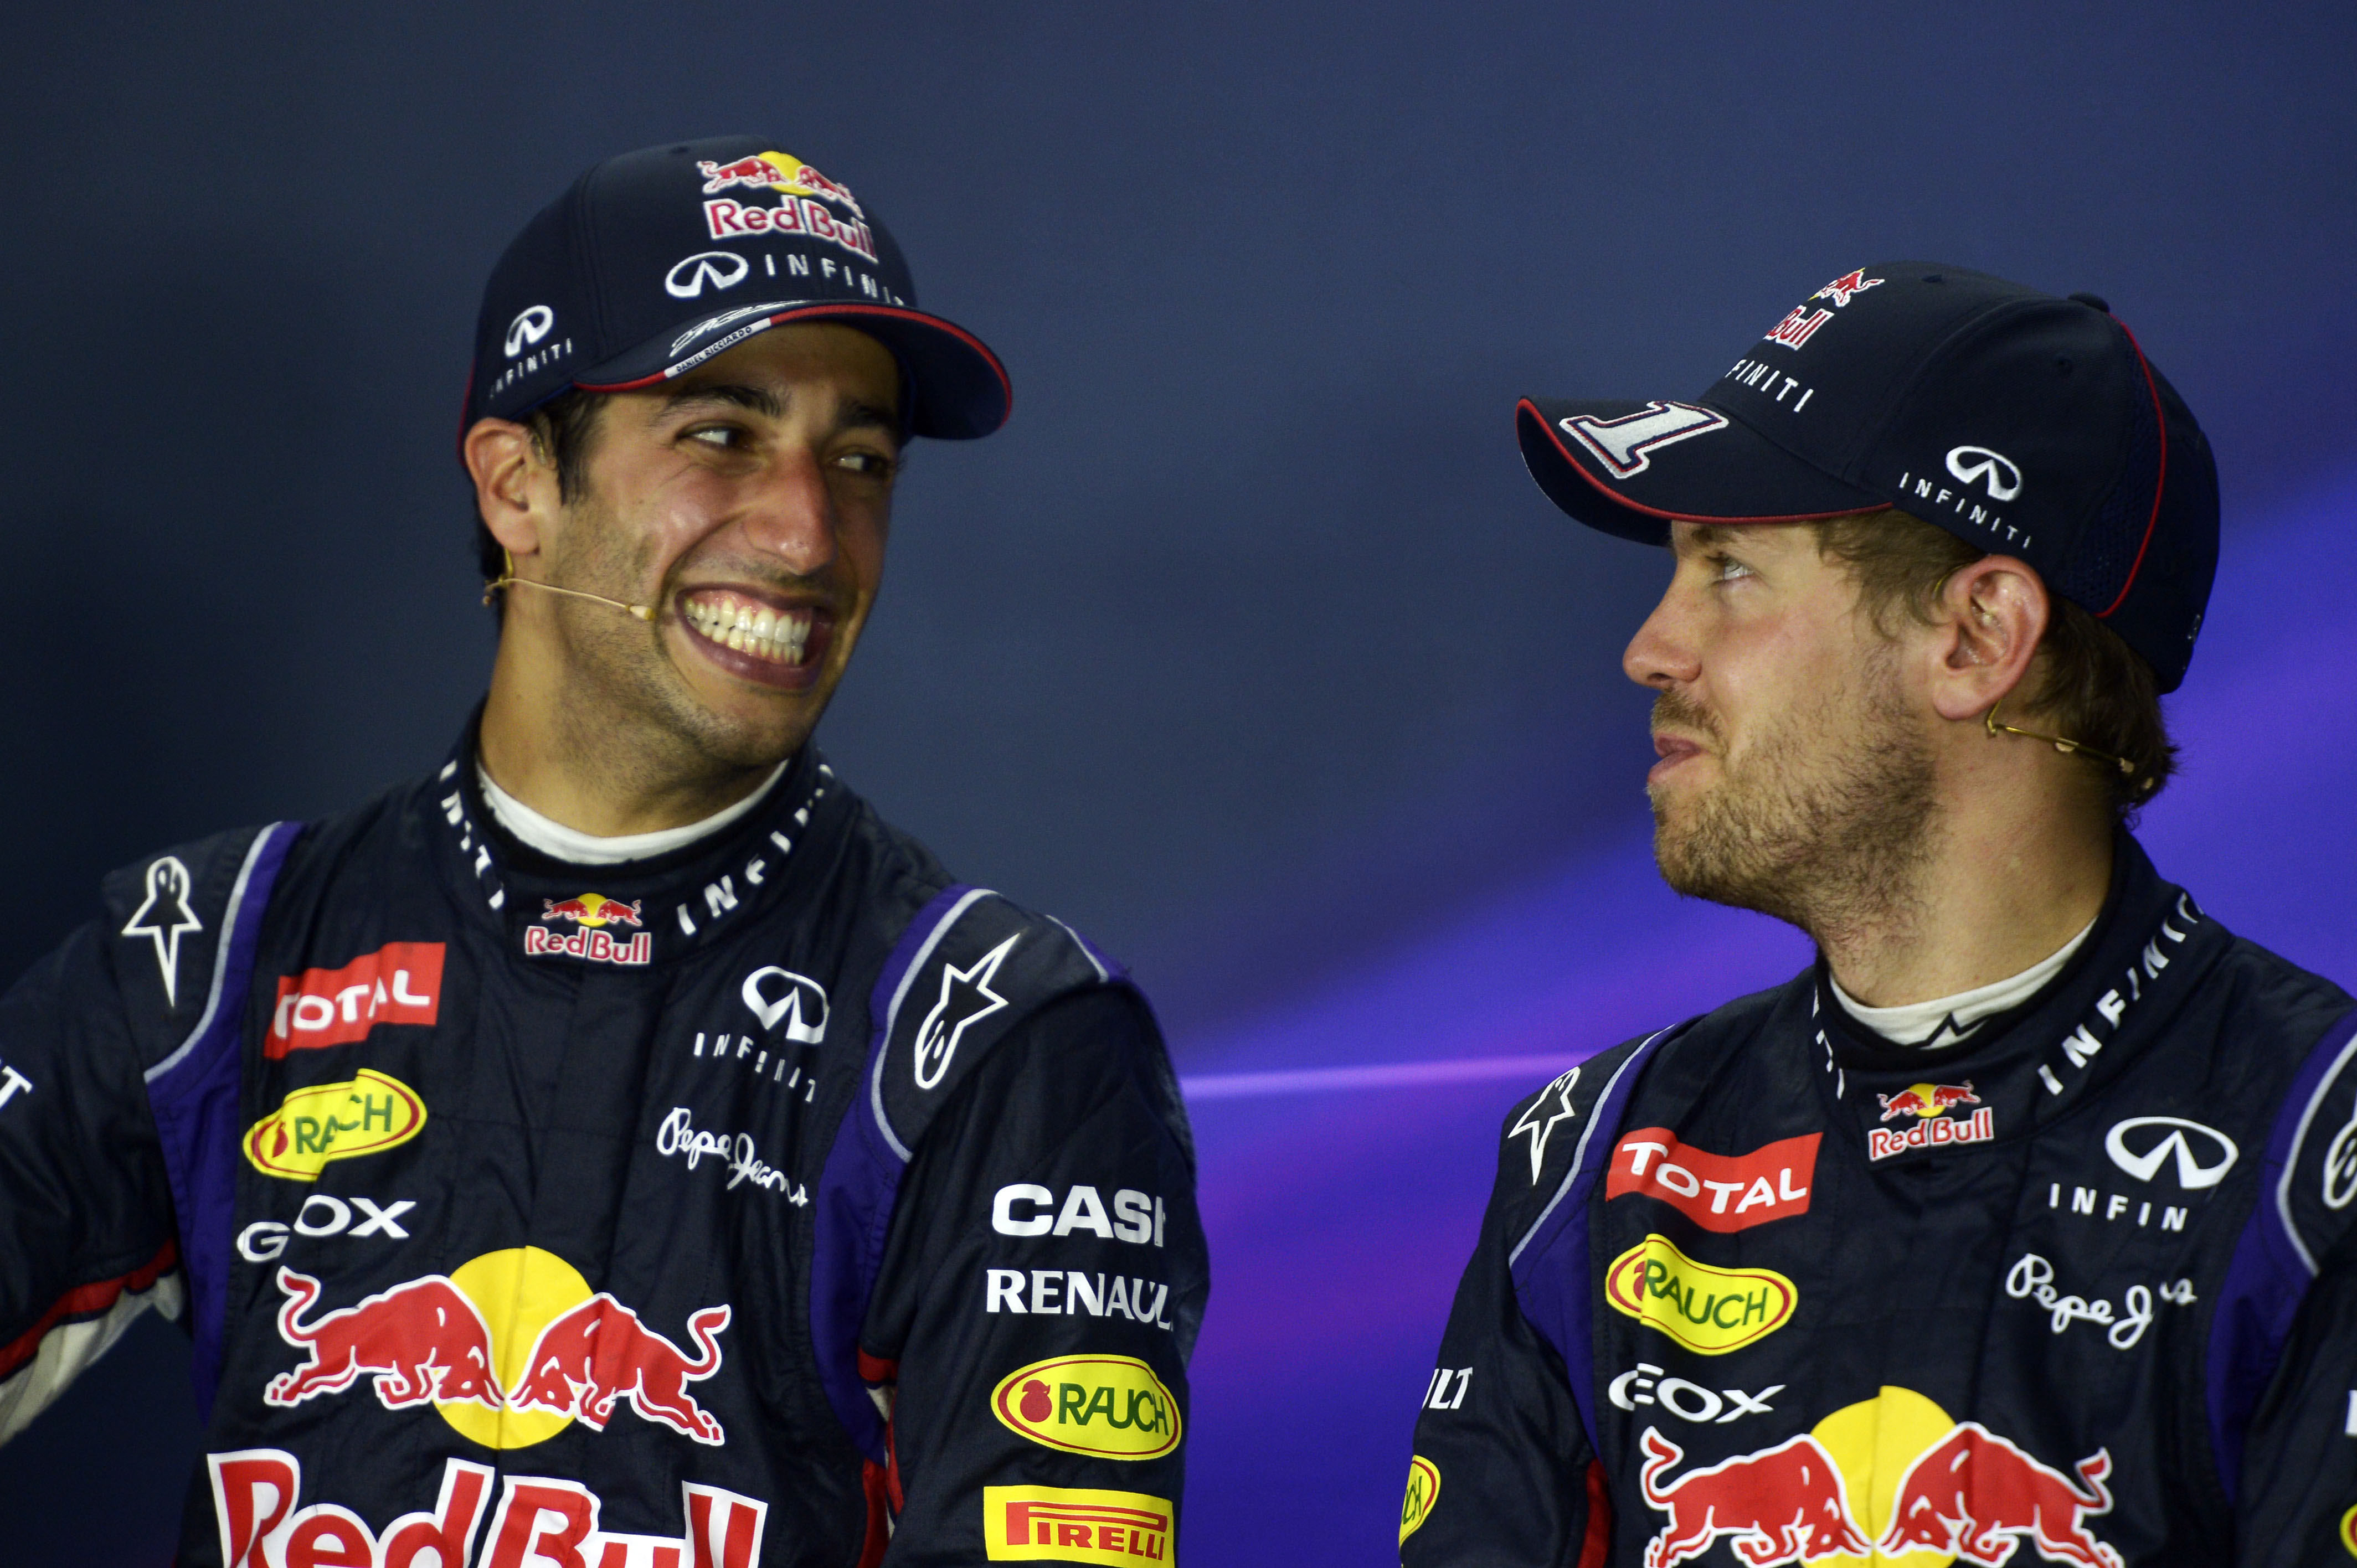 ‘Red Bull wil nog jaren verder met Vettel en Ricciardo’